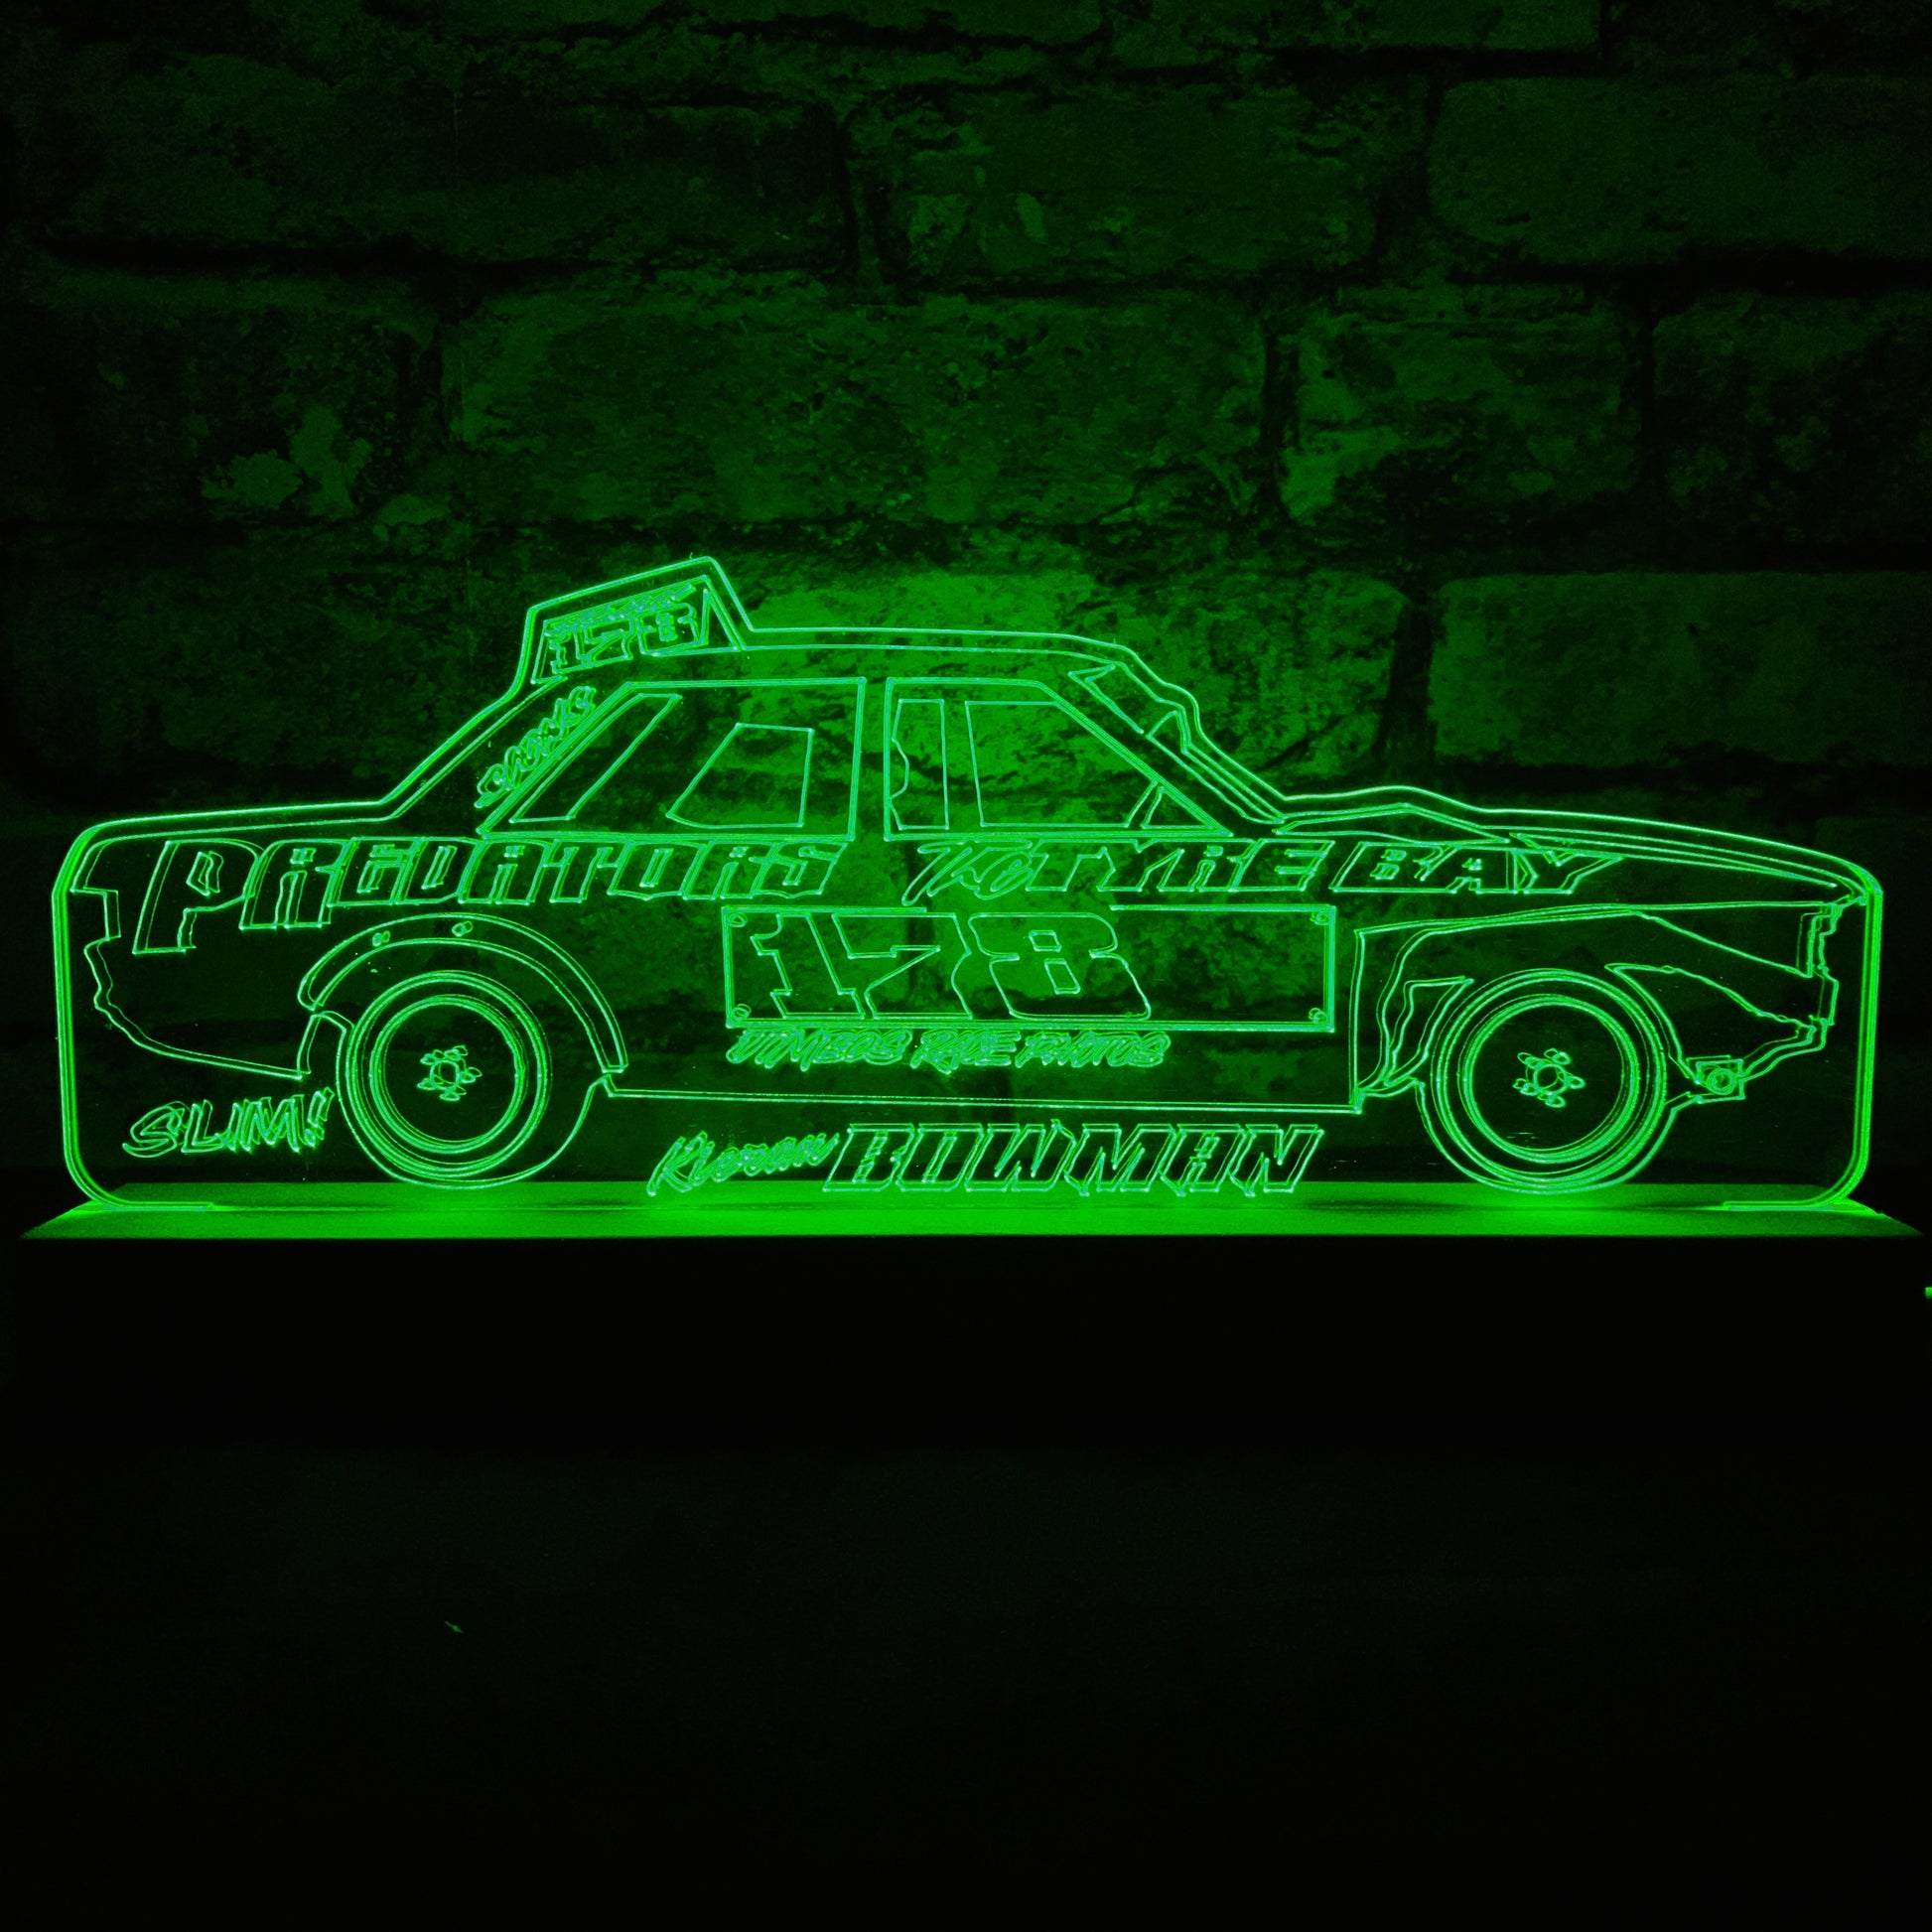 Kieran Bowman #178 - Banger Night Light - Large Wooden Base - Night Light - Stock Car & Banger Toy Tracks